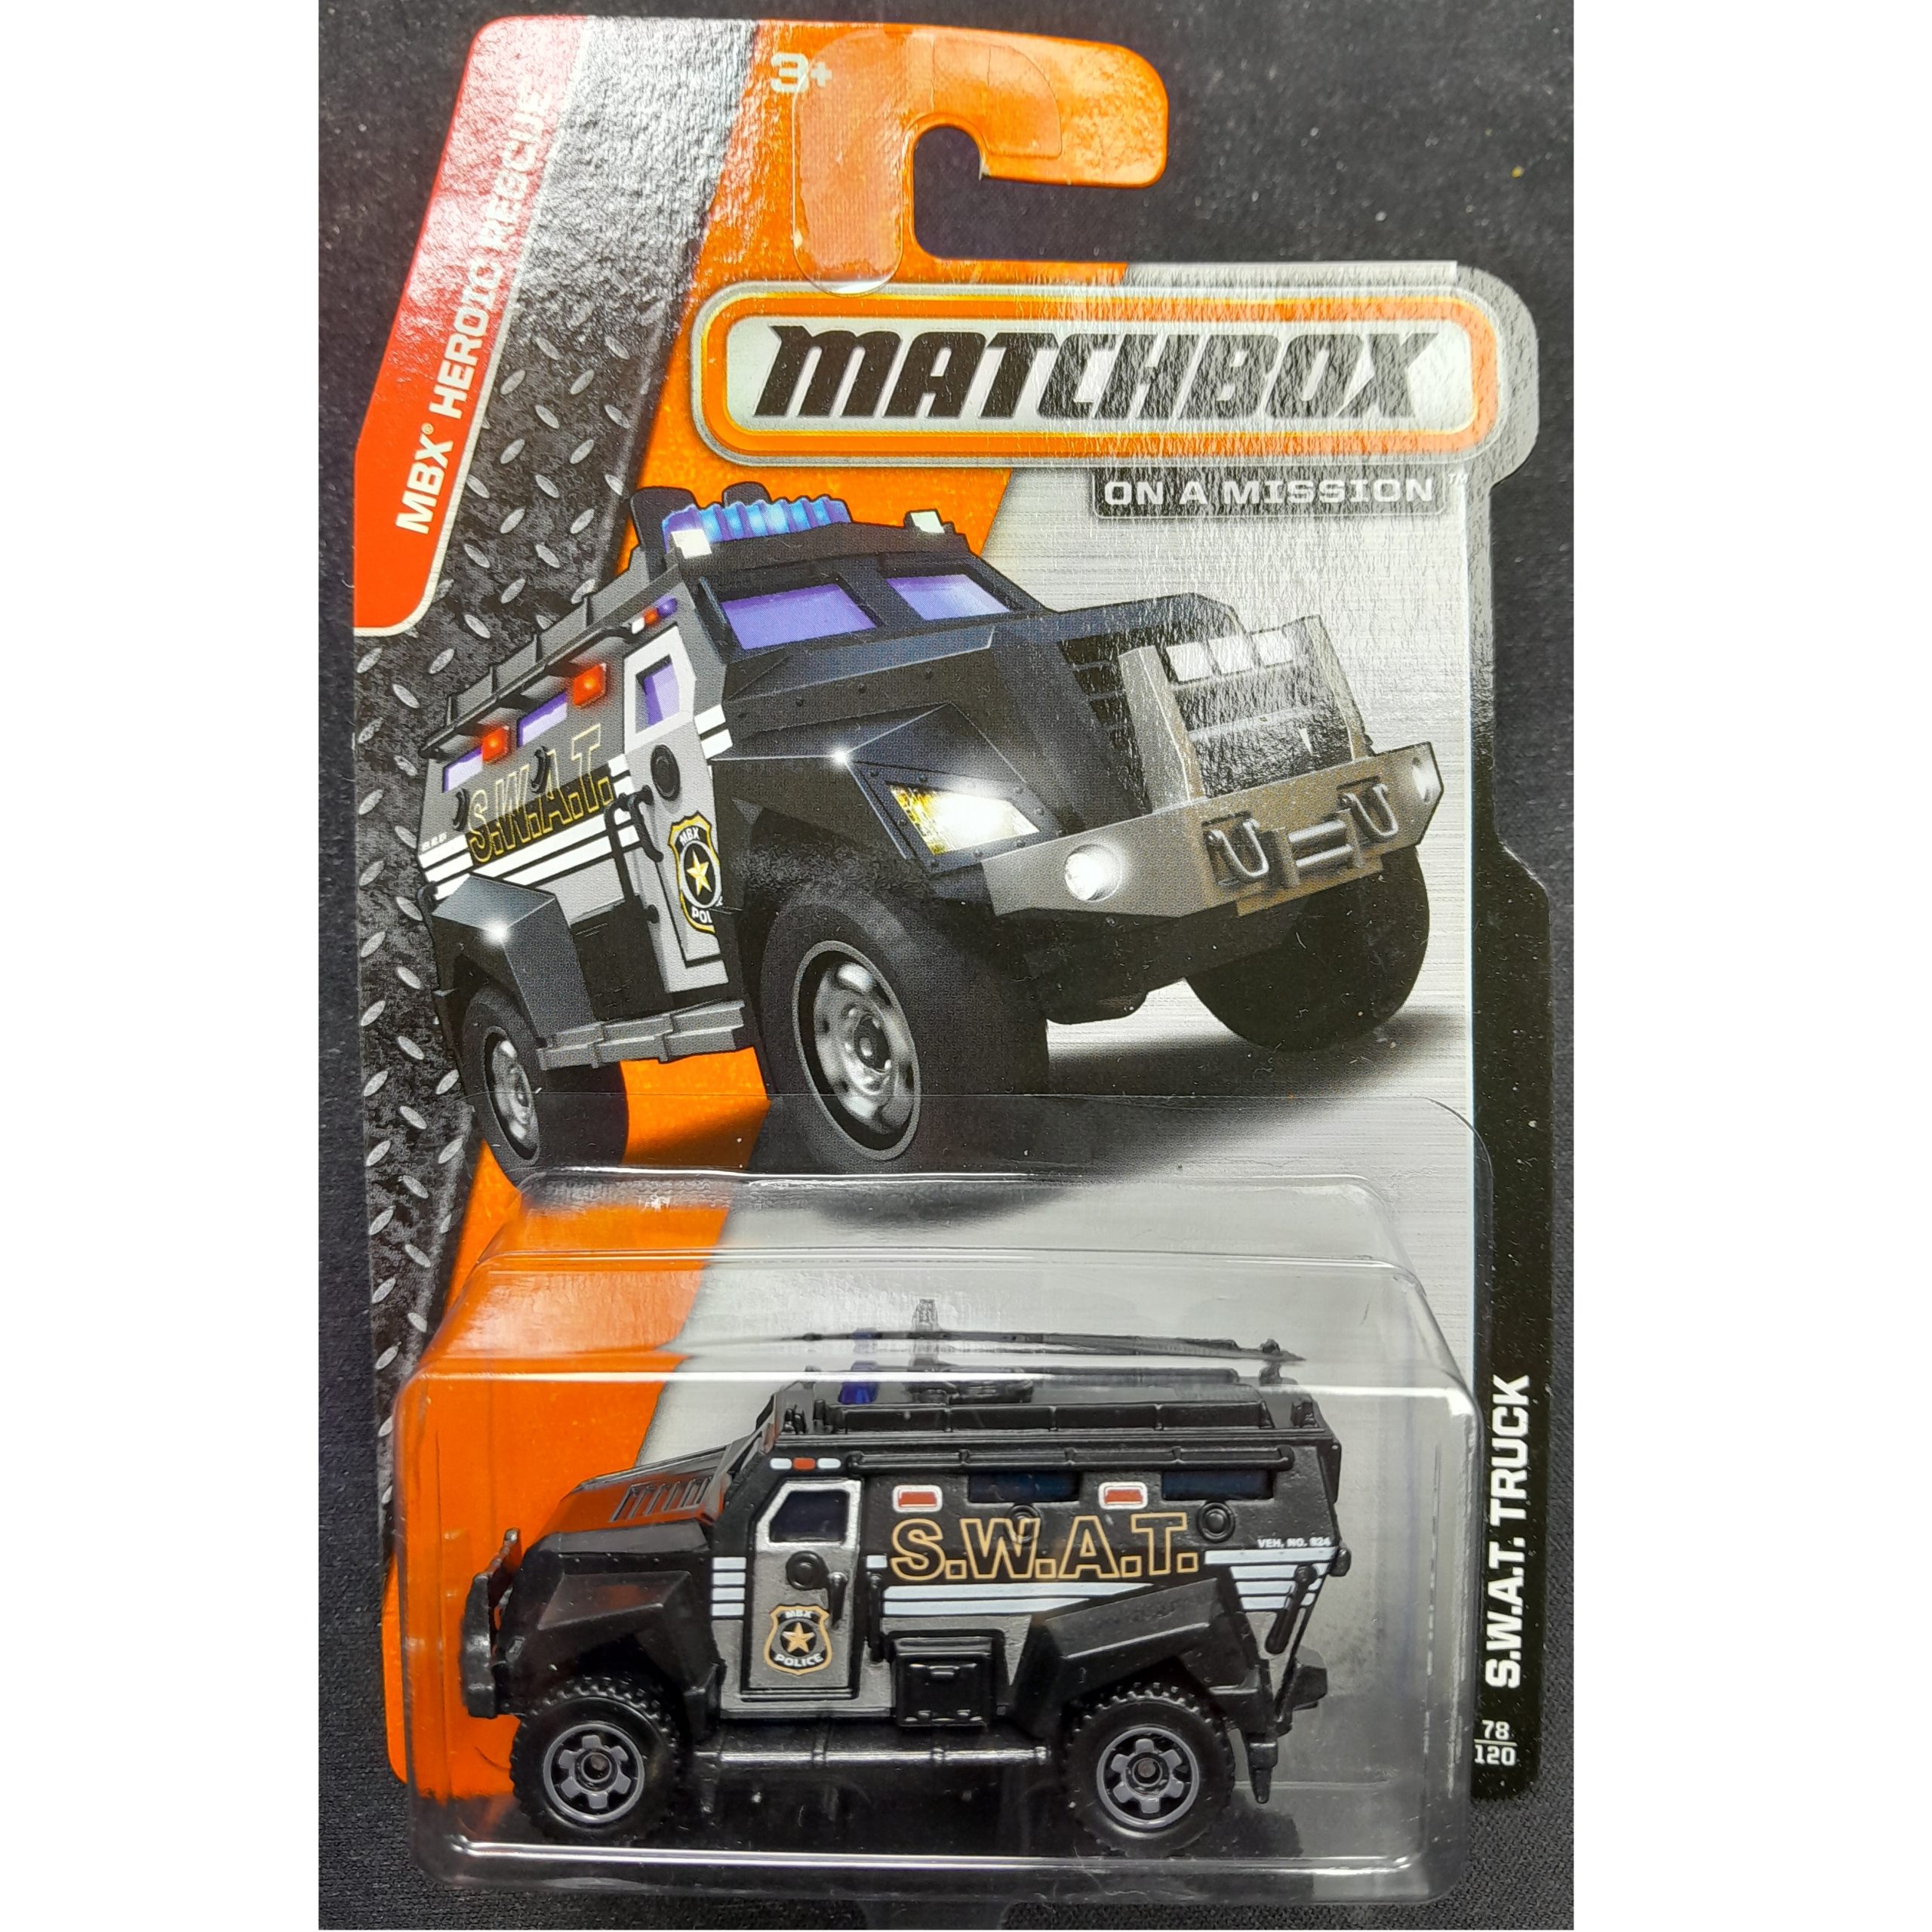 Matchbox MB830 : S.W.A.T Truck